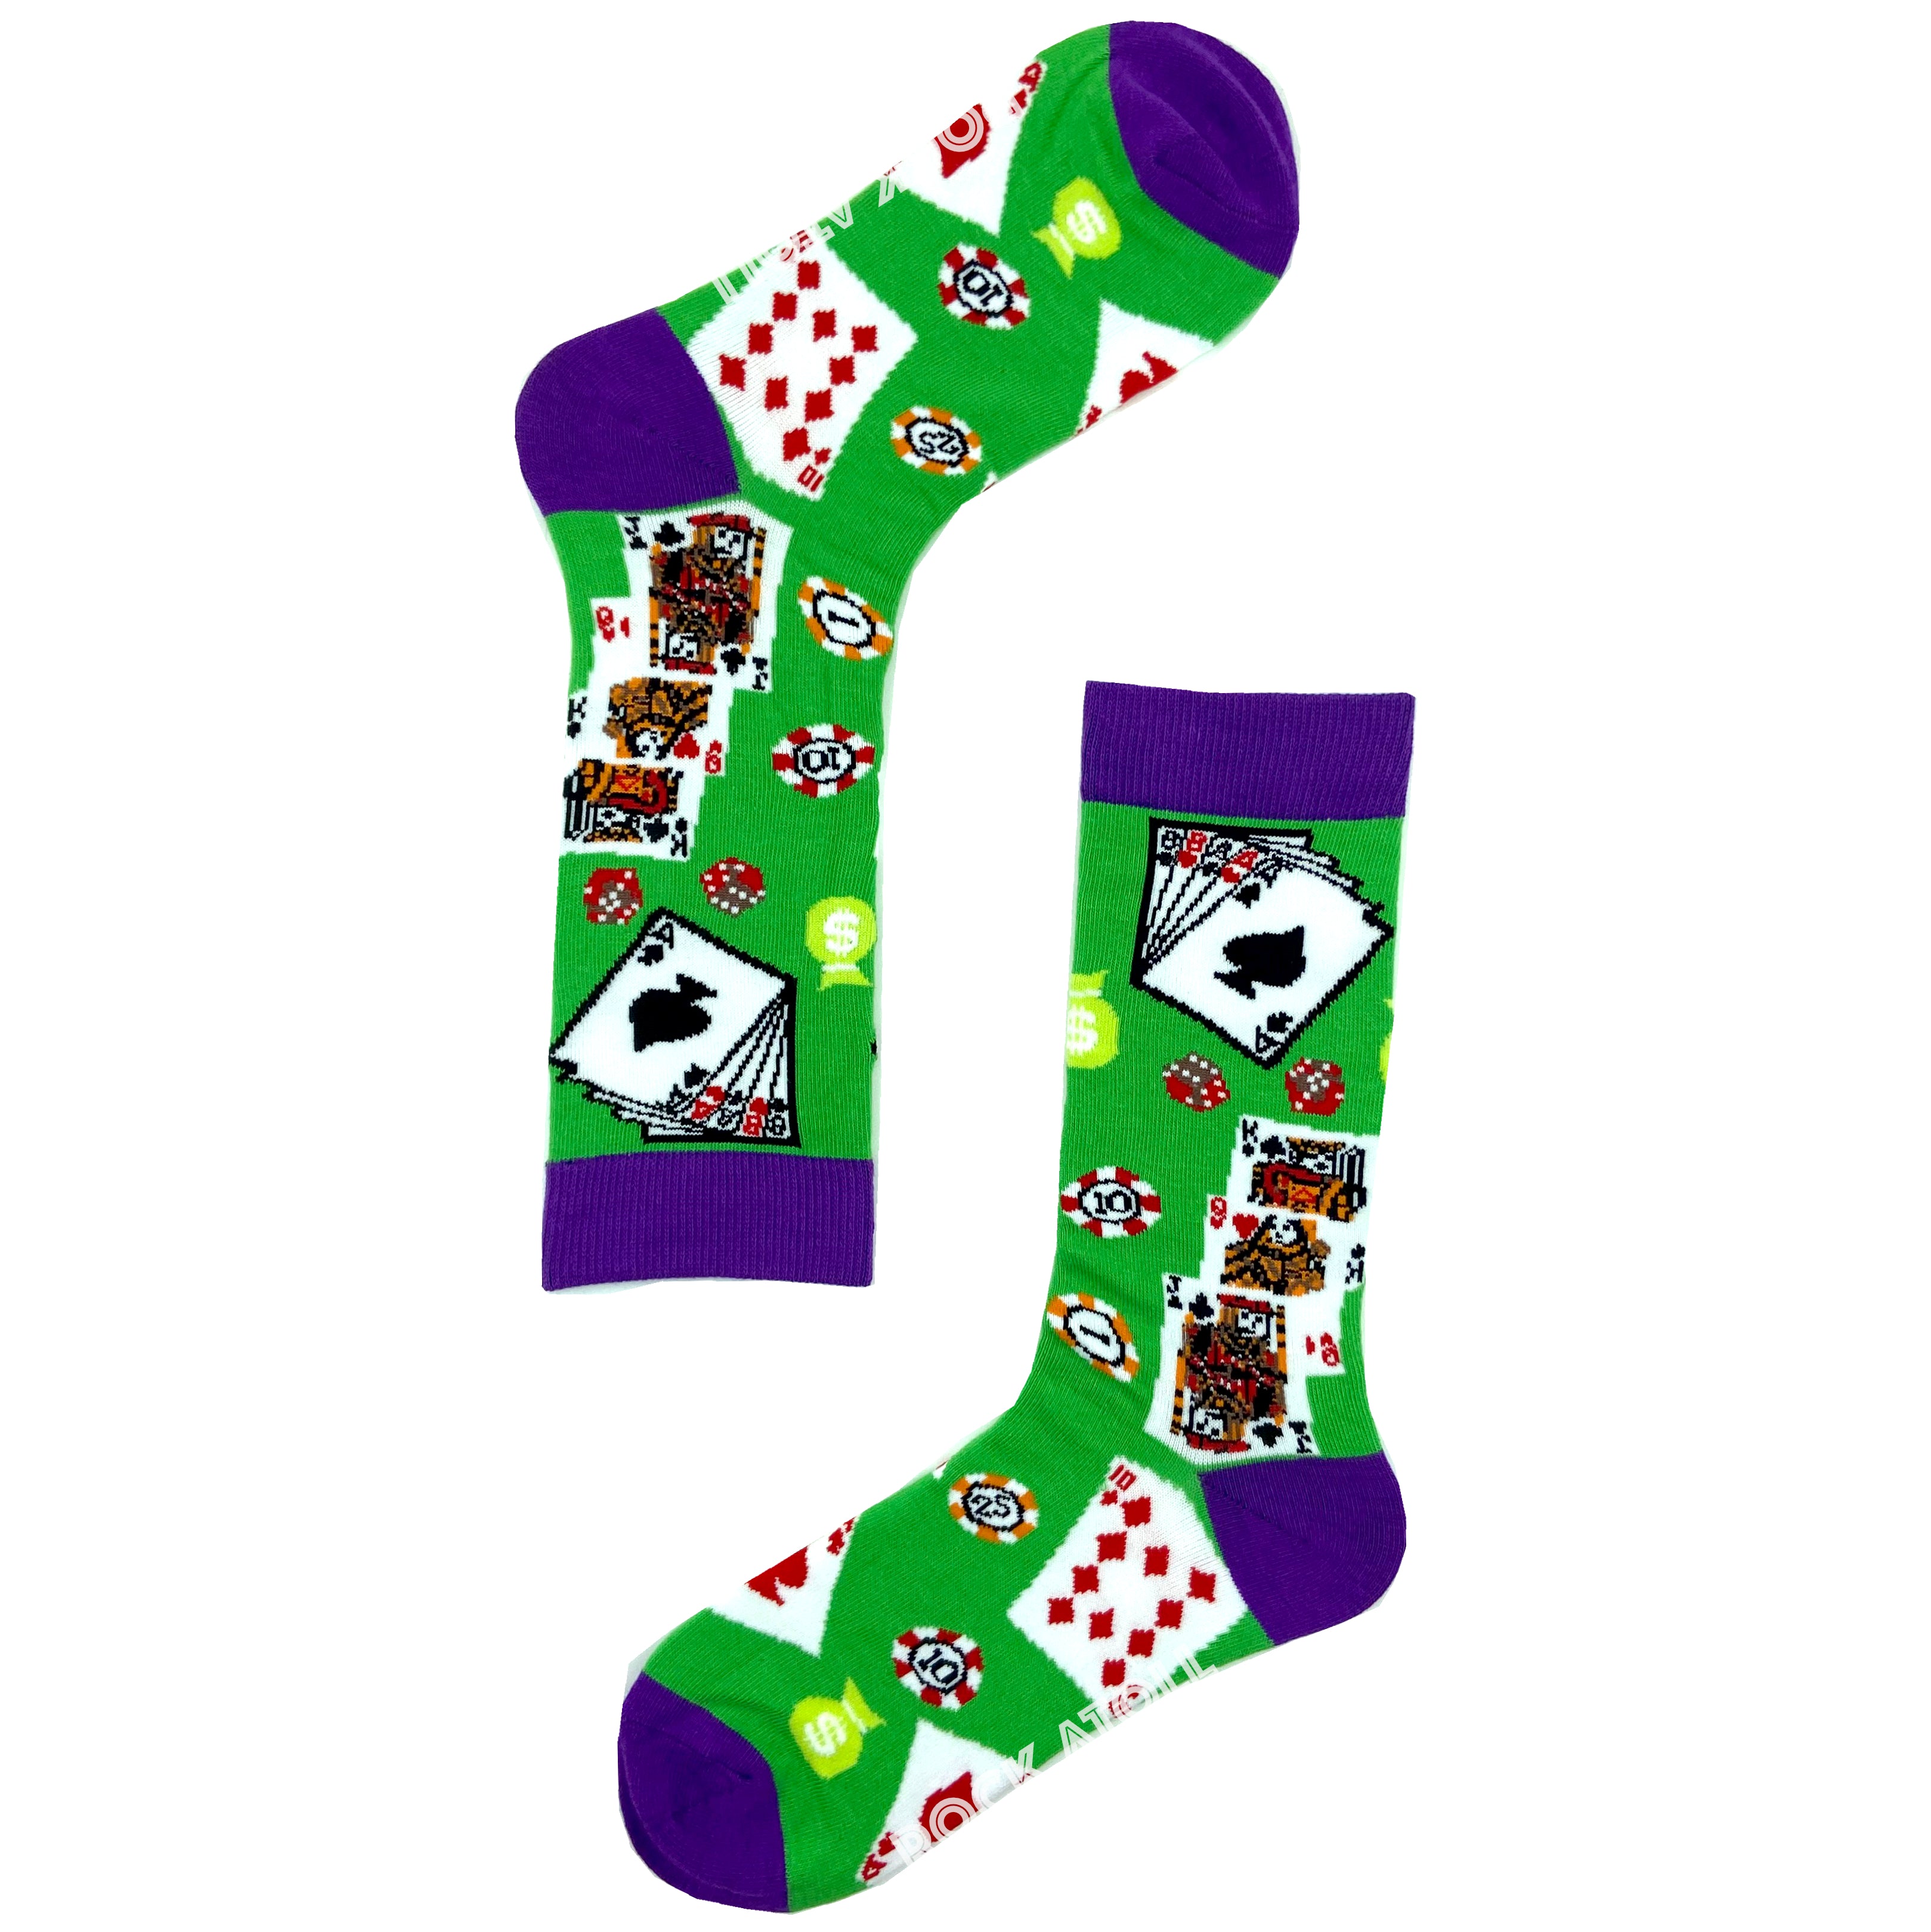 Unisex Bright Green Playing Card Poker Themed Novelty Dress Socks